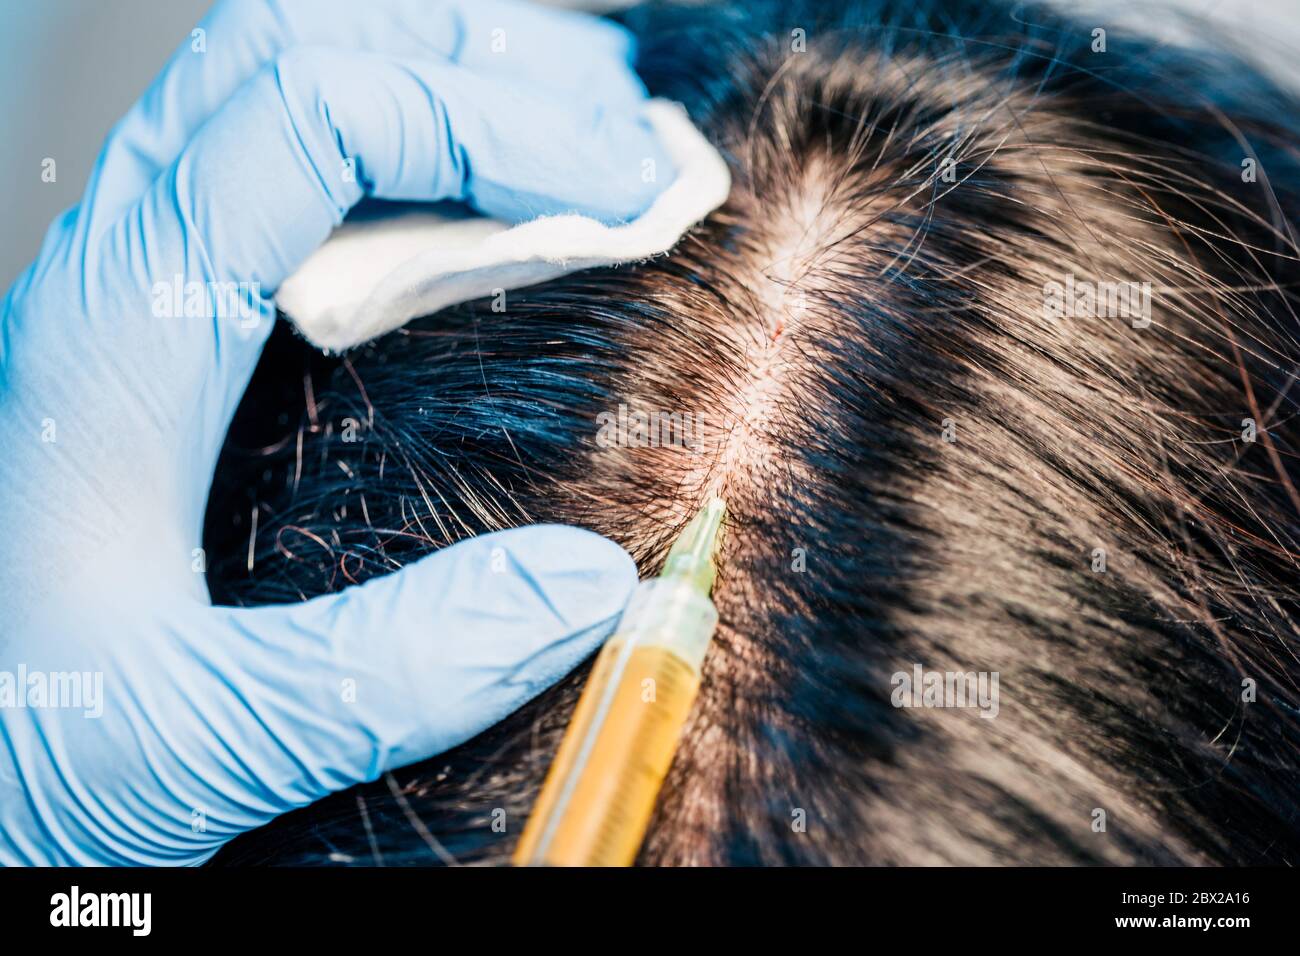 Hair transplantation - hair follicle transplantation - treatment of baldness and strengthening the scalp Stock Photo